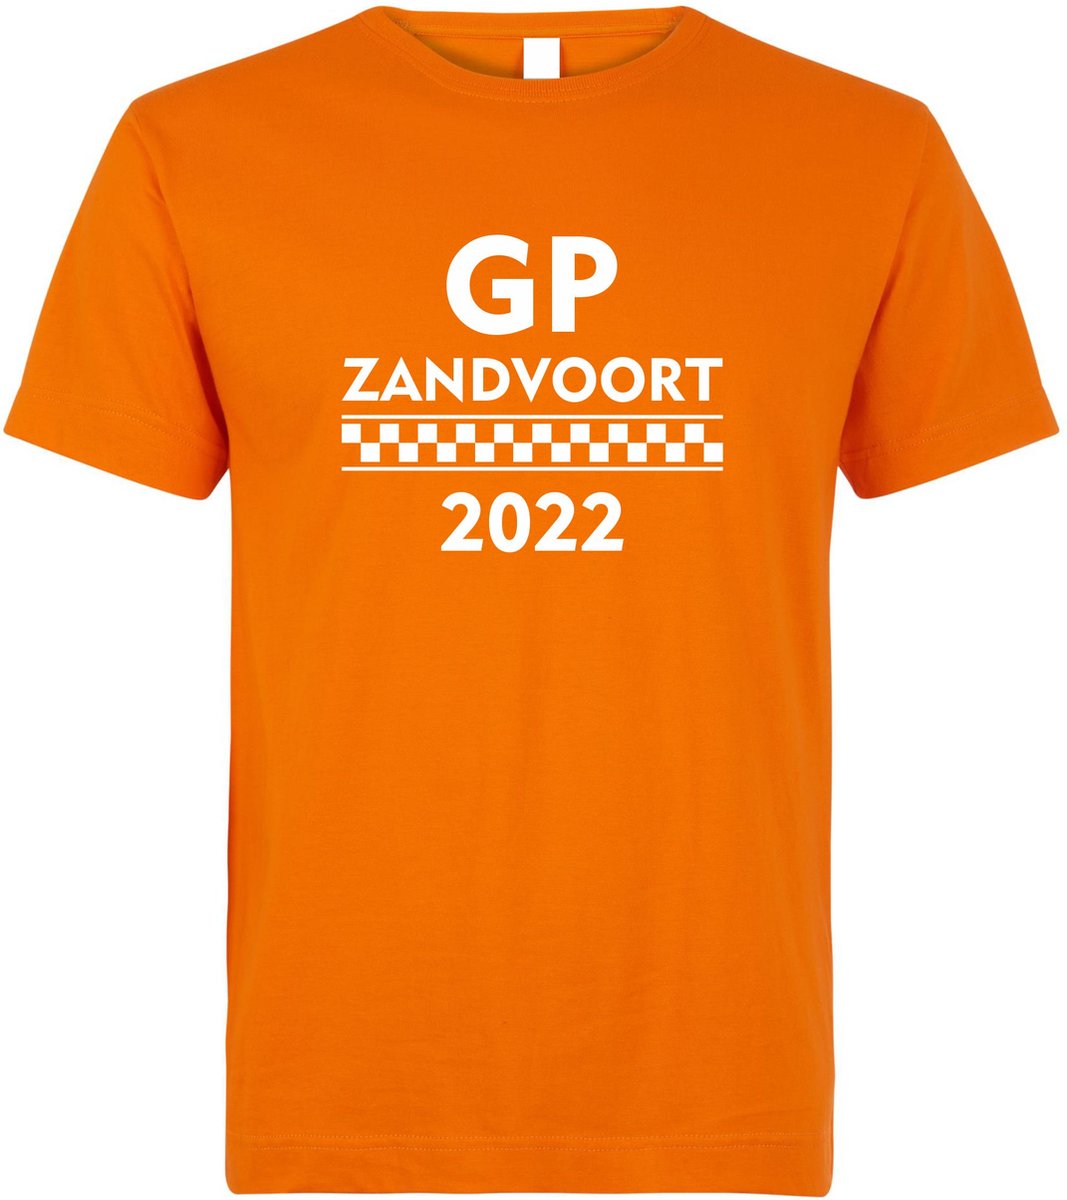 T-shirt kinderen GP Zandvoort 2022 | Max Verstappen / Red Bull Racing / Formule 1 fan | Grand Prix Circuit Zandvoort | kleding shirt | Oranje | maat 104